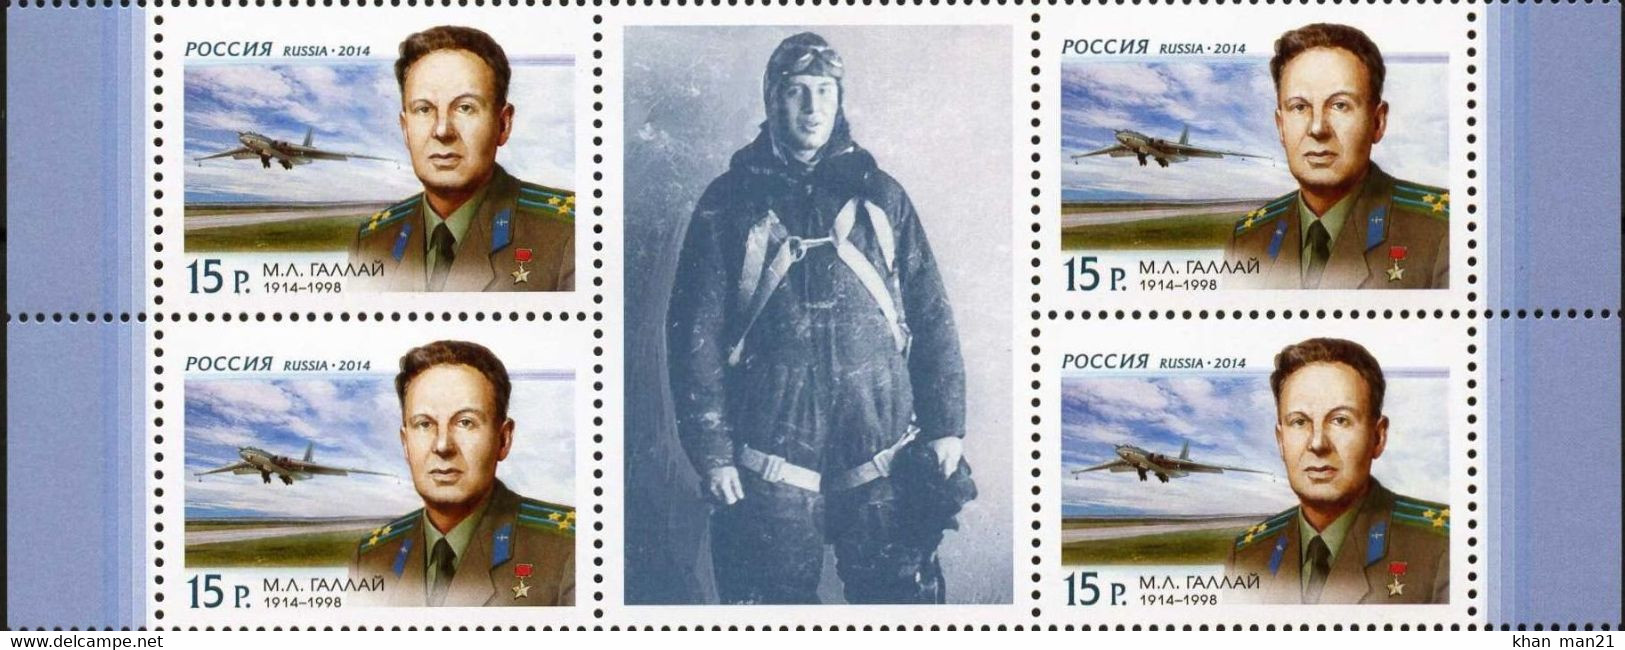 Russia, 2014, Mi. 2031, Sc. 7519, The 100th Anniv. Of M.L. Gallai, Test Pilot, Airplanes, MNH - Ungebraucht